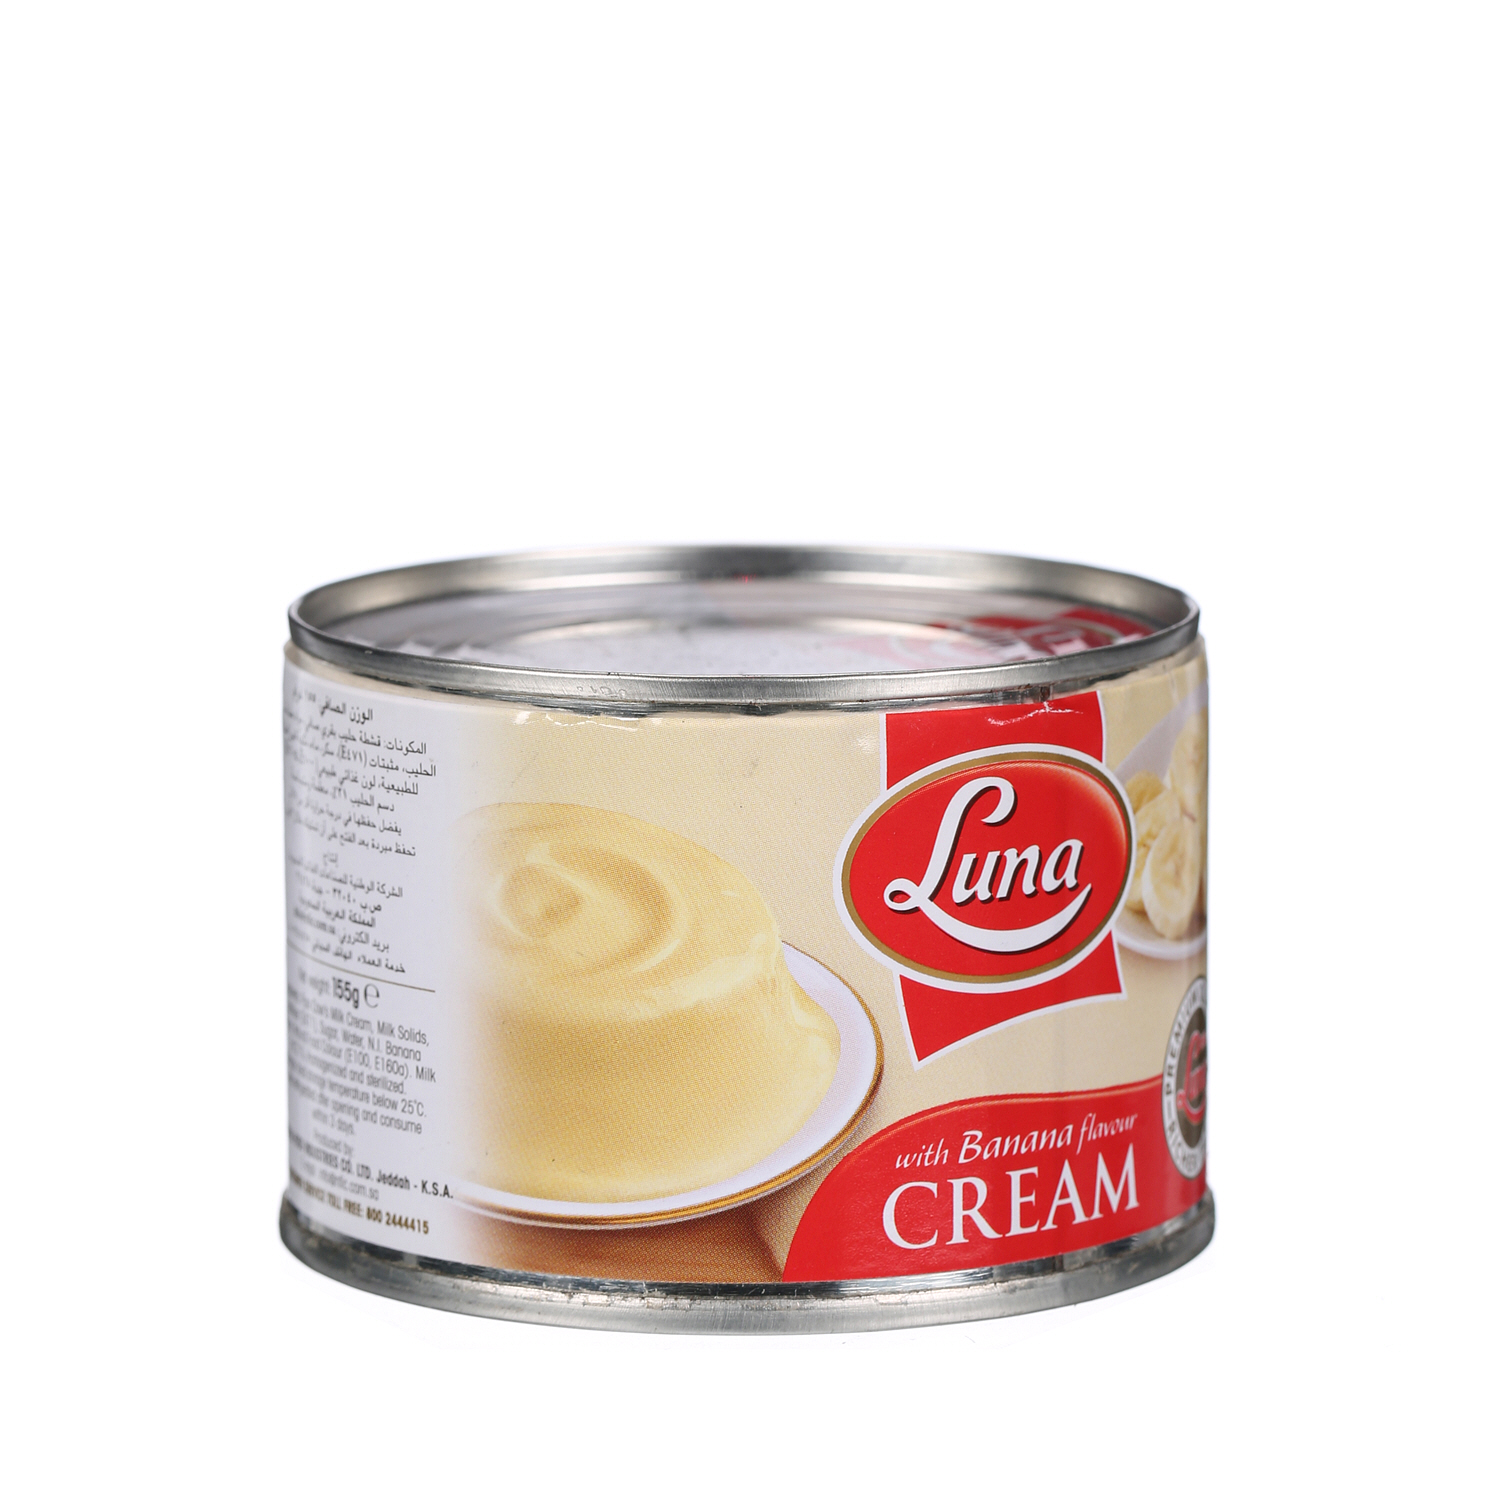 Luna Cream Banana Flavor 170 g